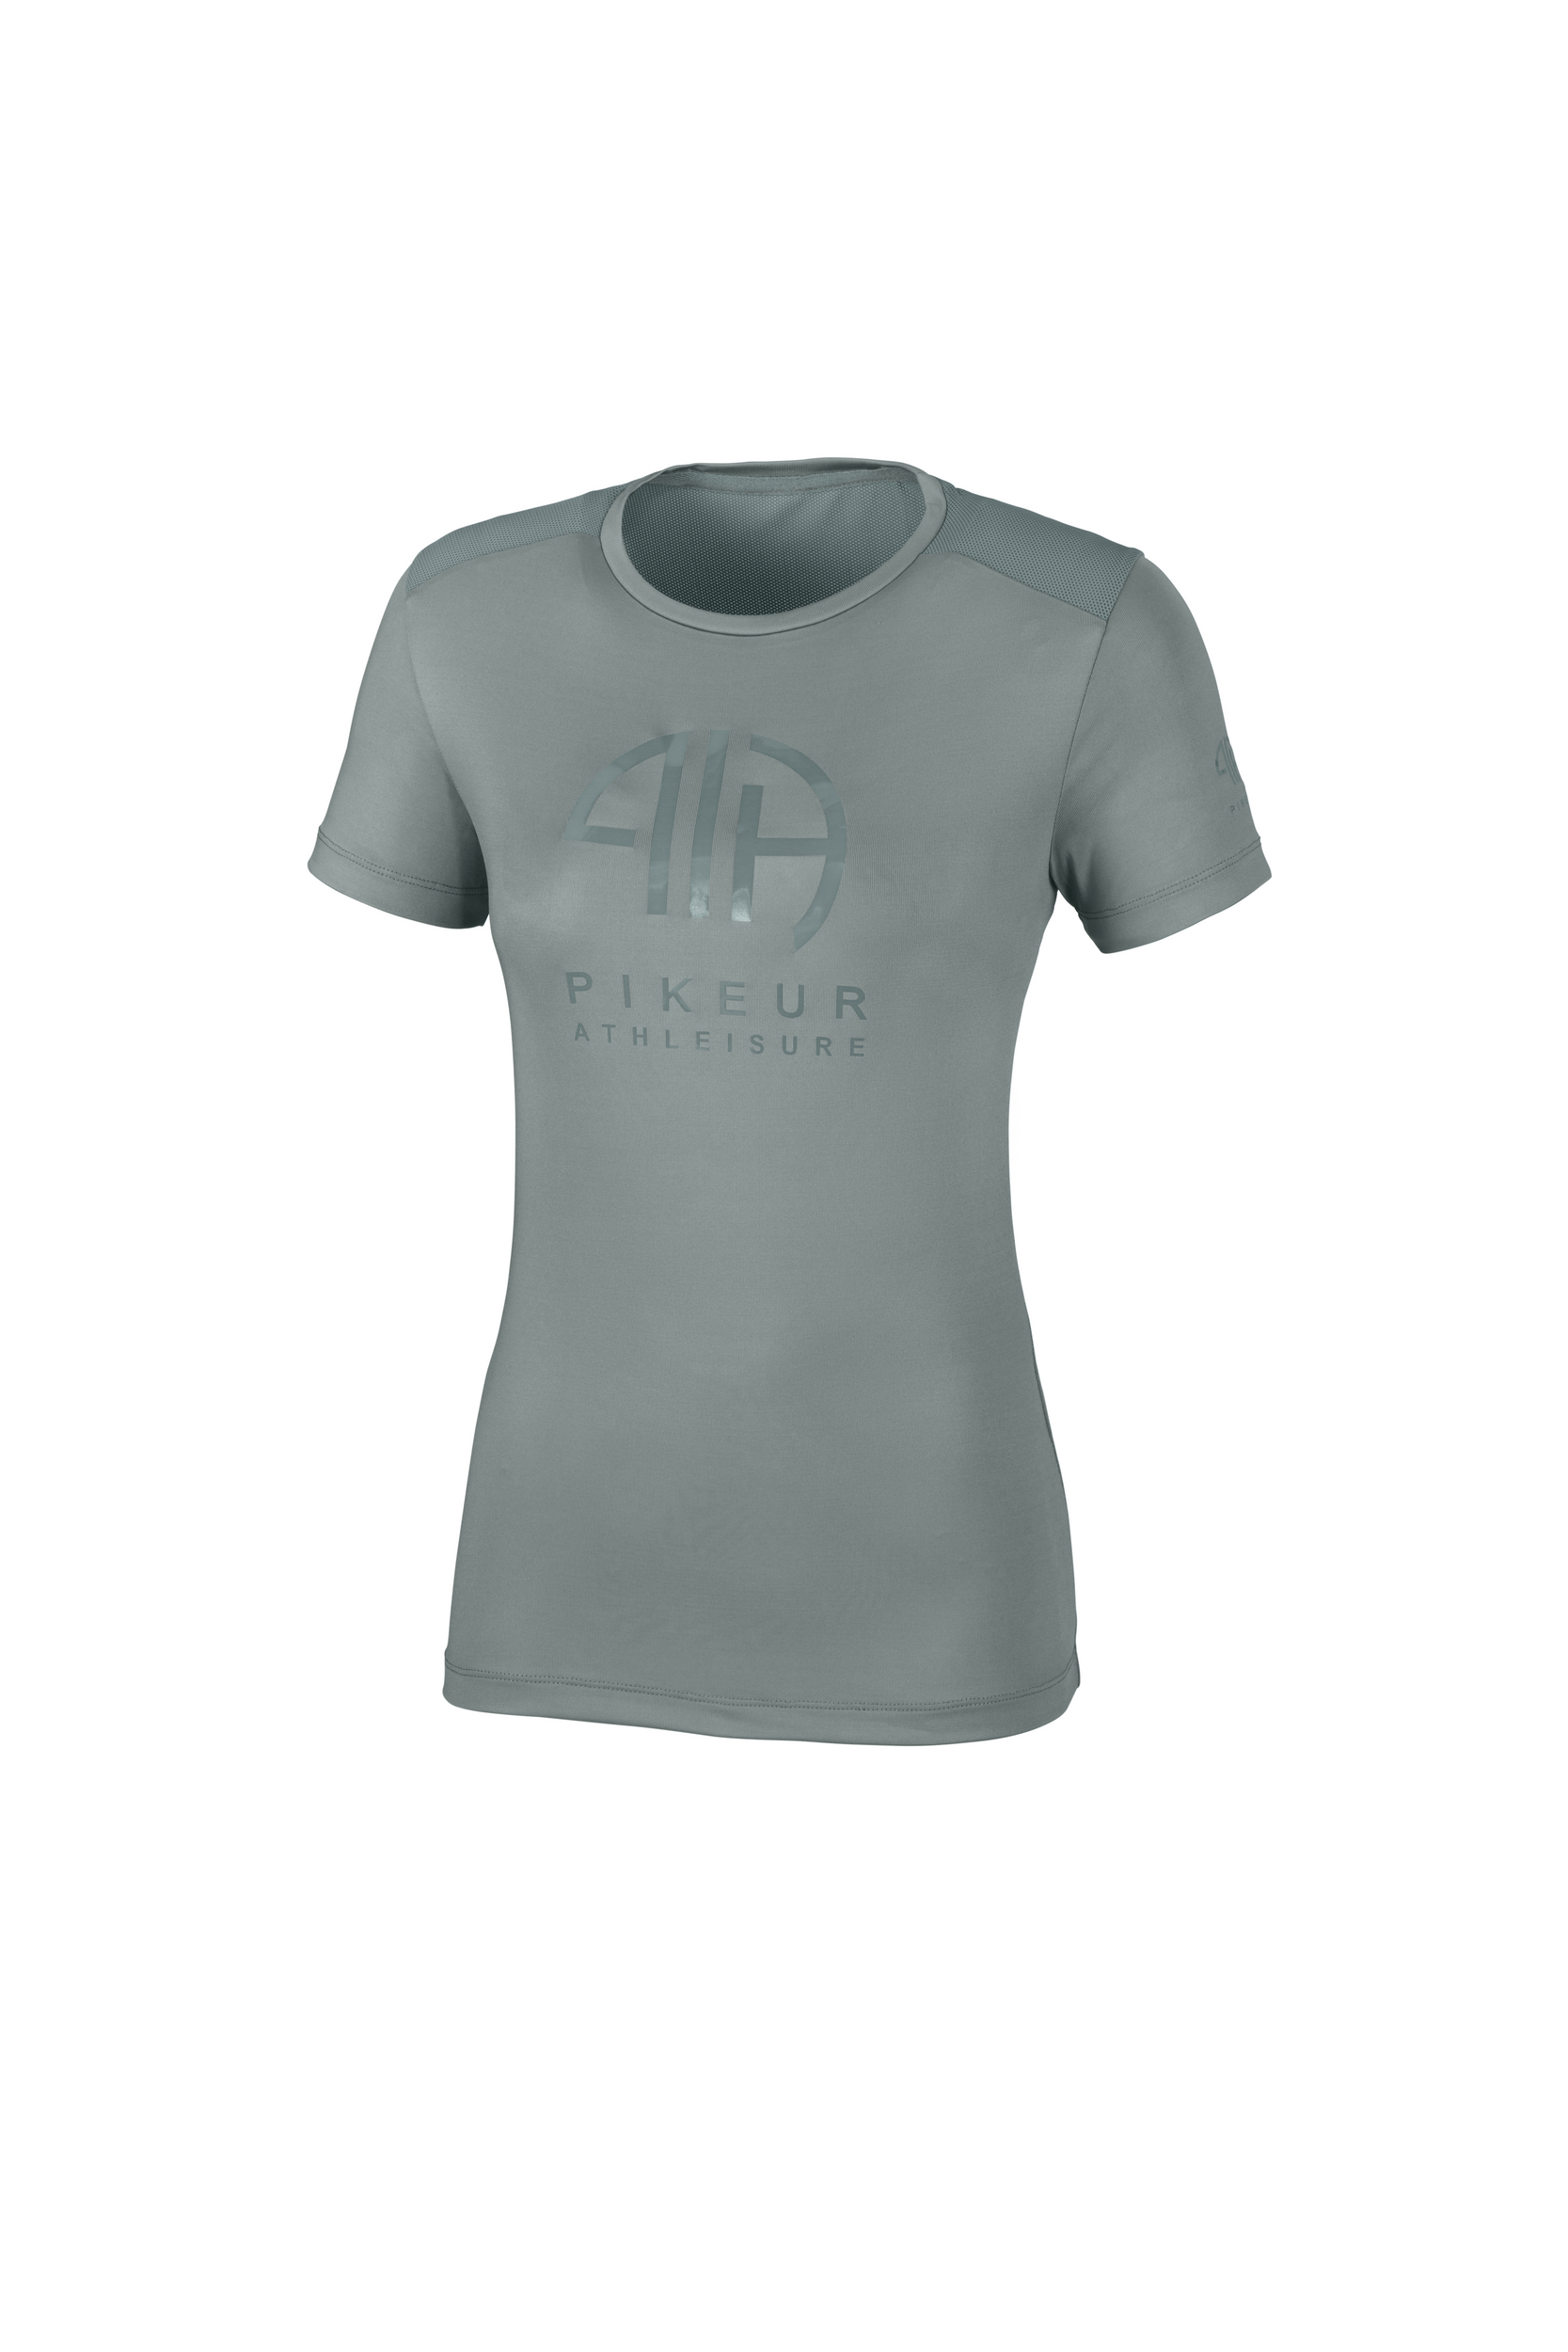 PIKEUR modisches Damen Funktions T-Shirt Athleisure FS24 - jade - 40